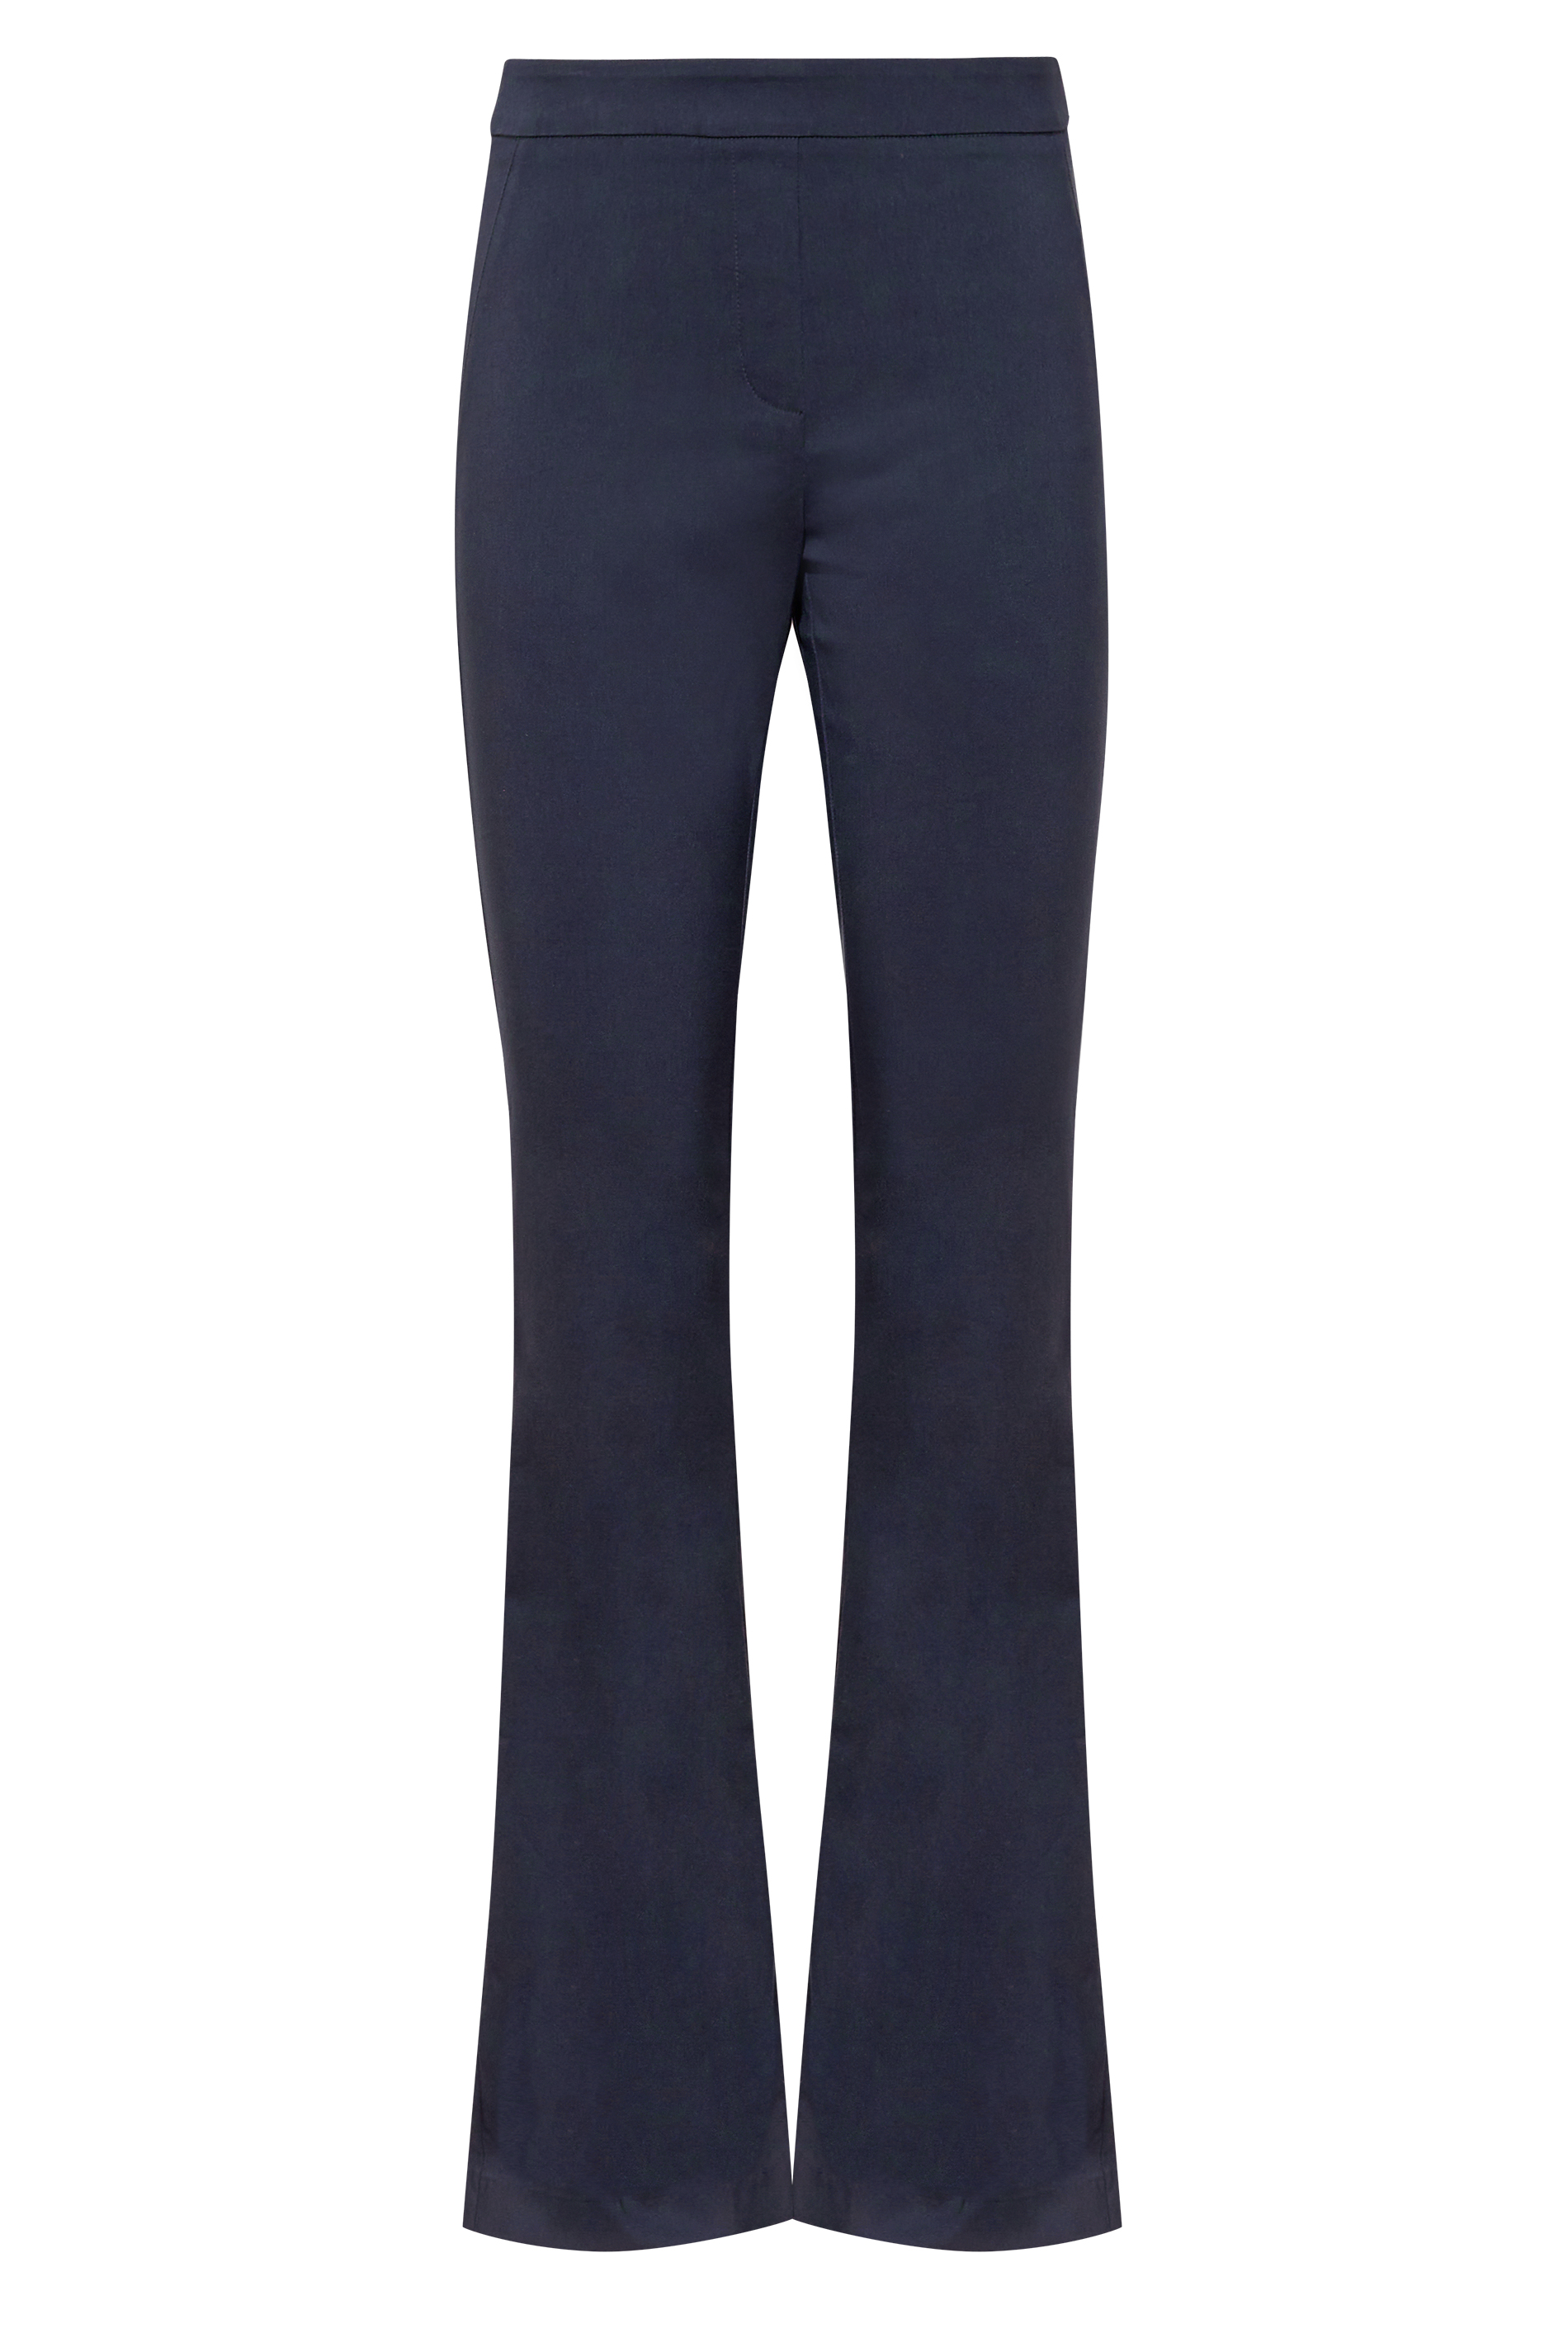 Kotty Regular Fit Women Regular Length Navy Blue Trousers